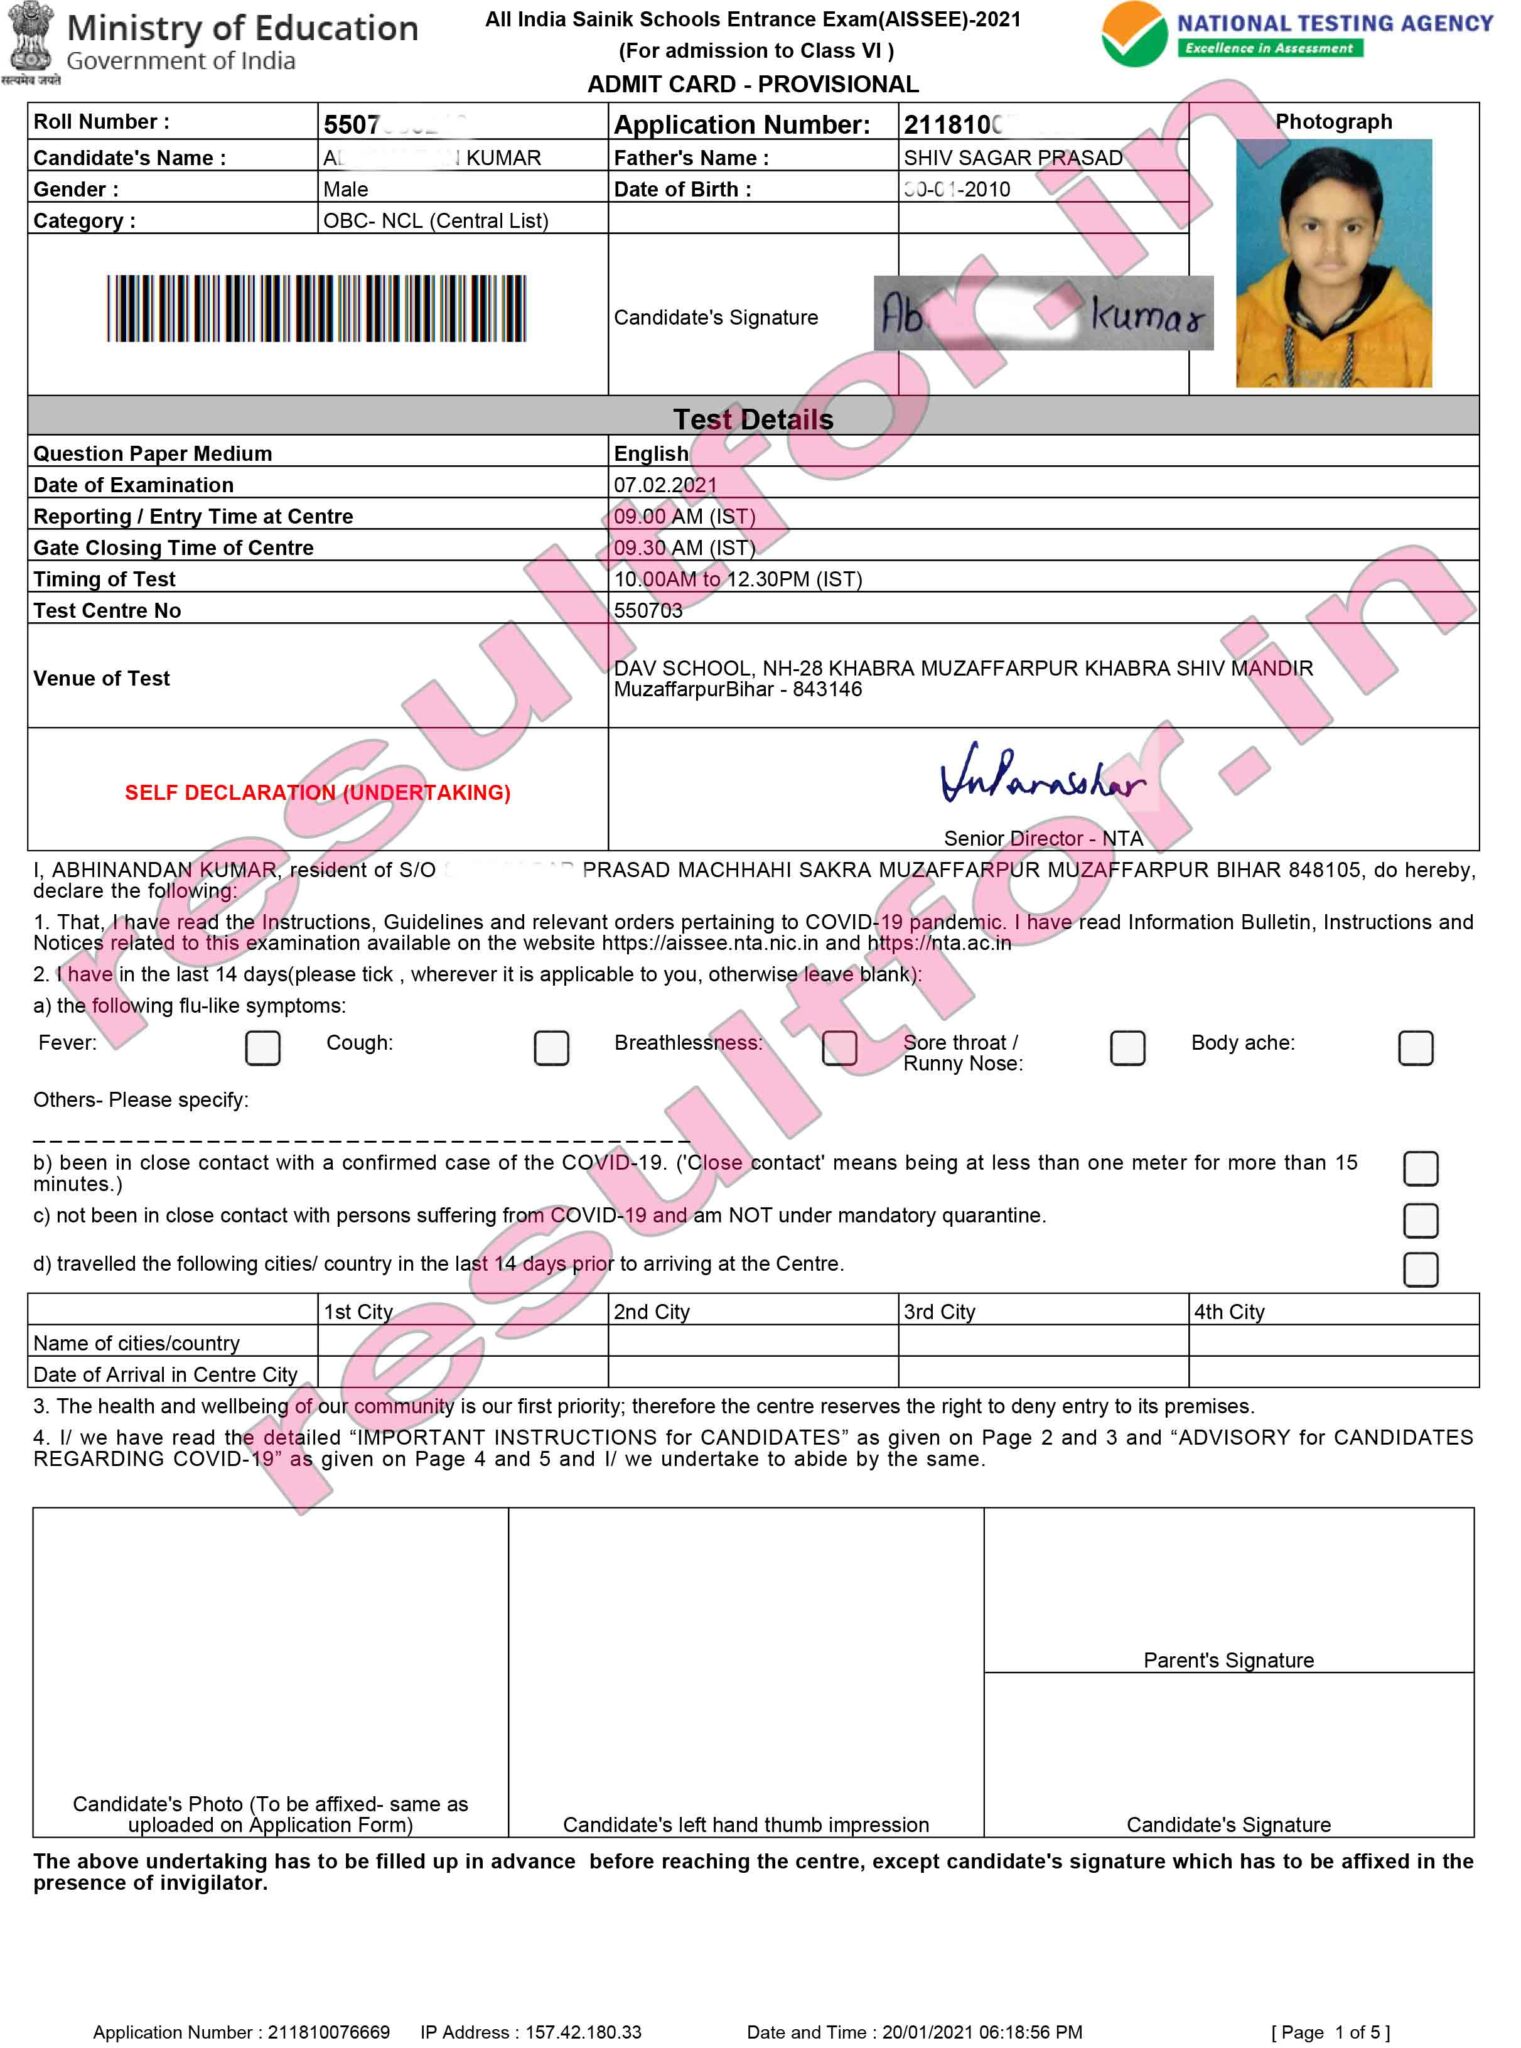 AISSEE Admit Card 2023, Sainik School 6t Admit Card Link